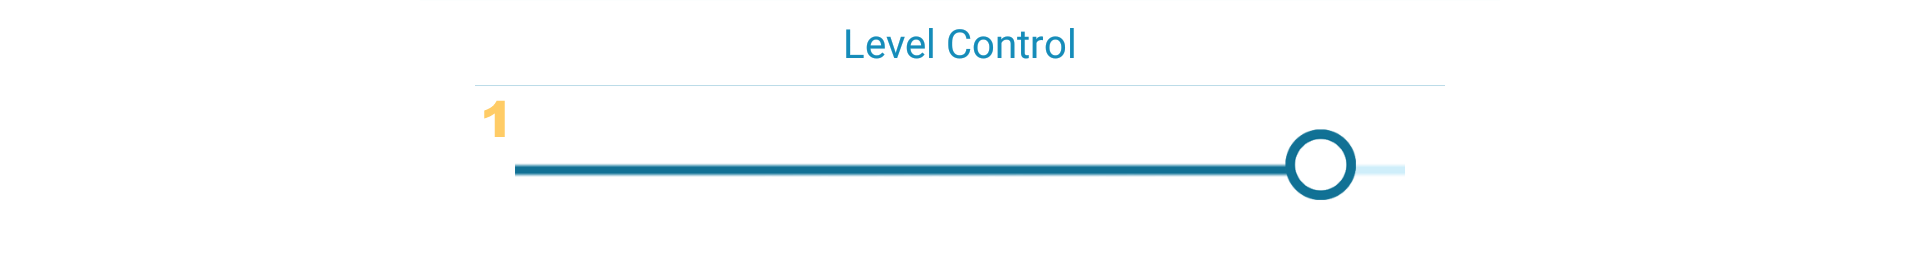 level control